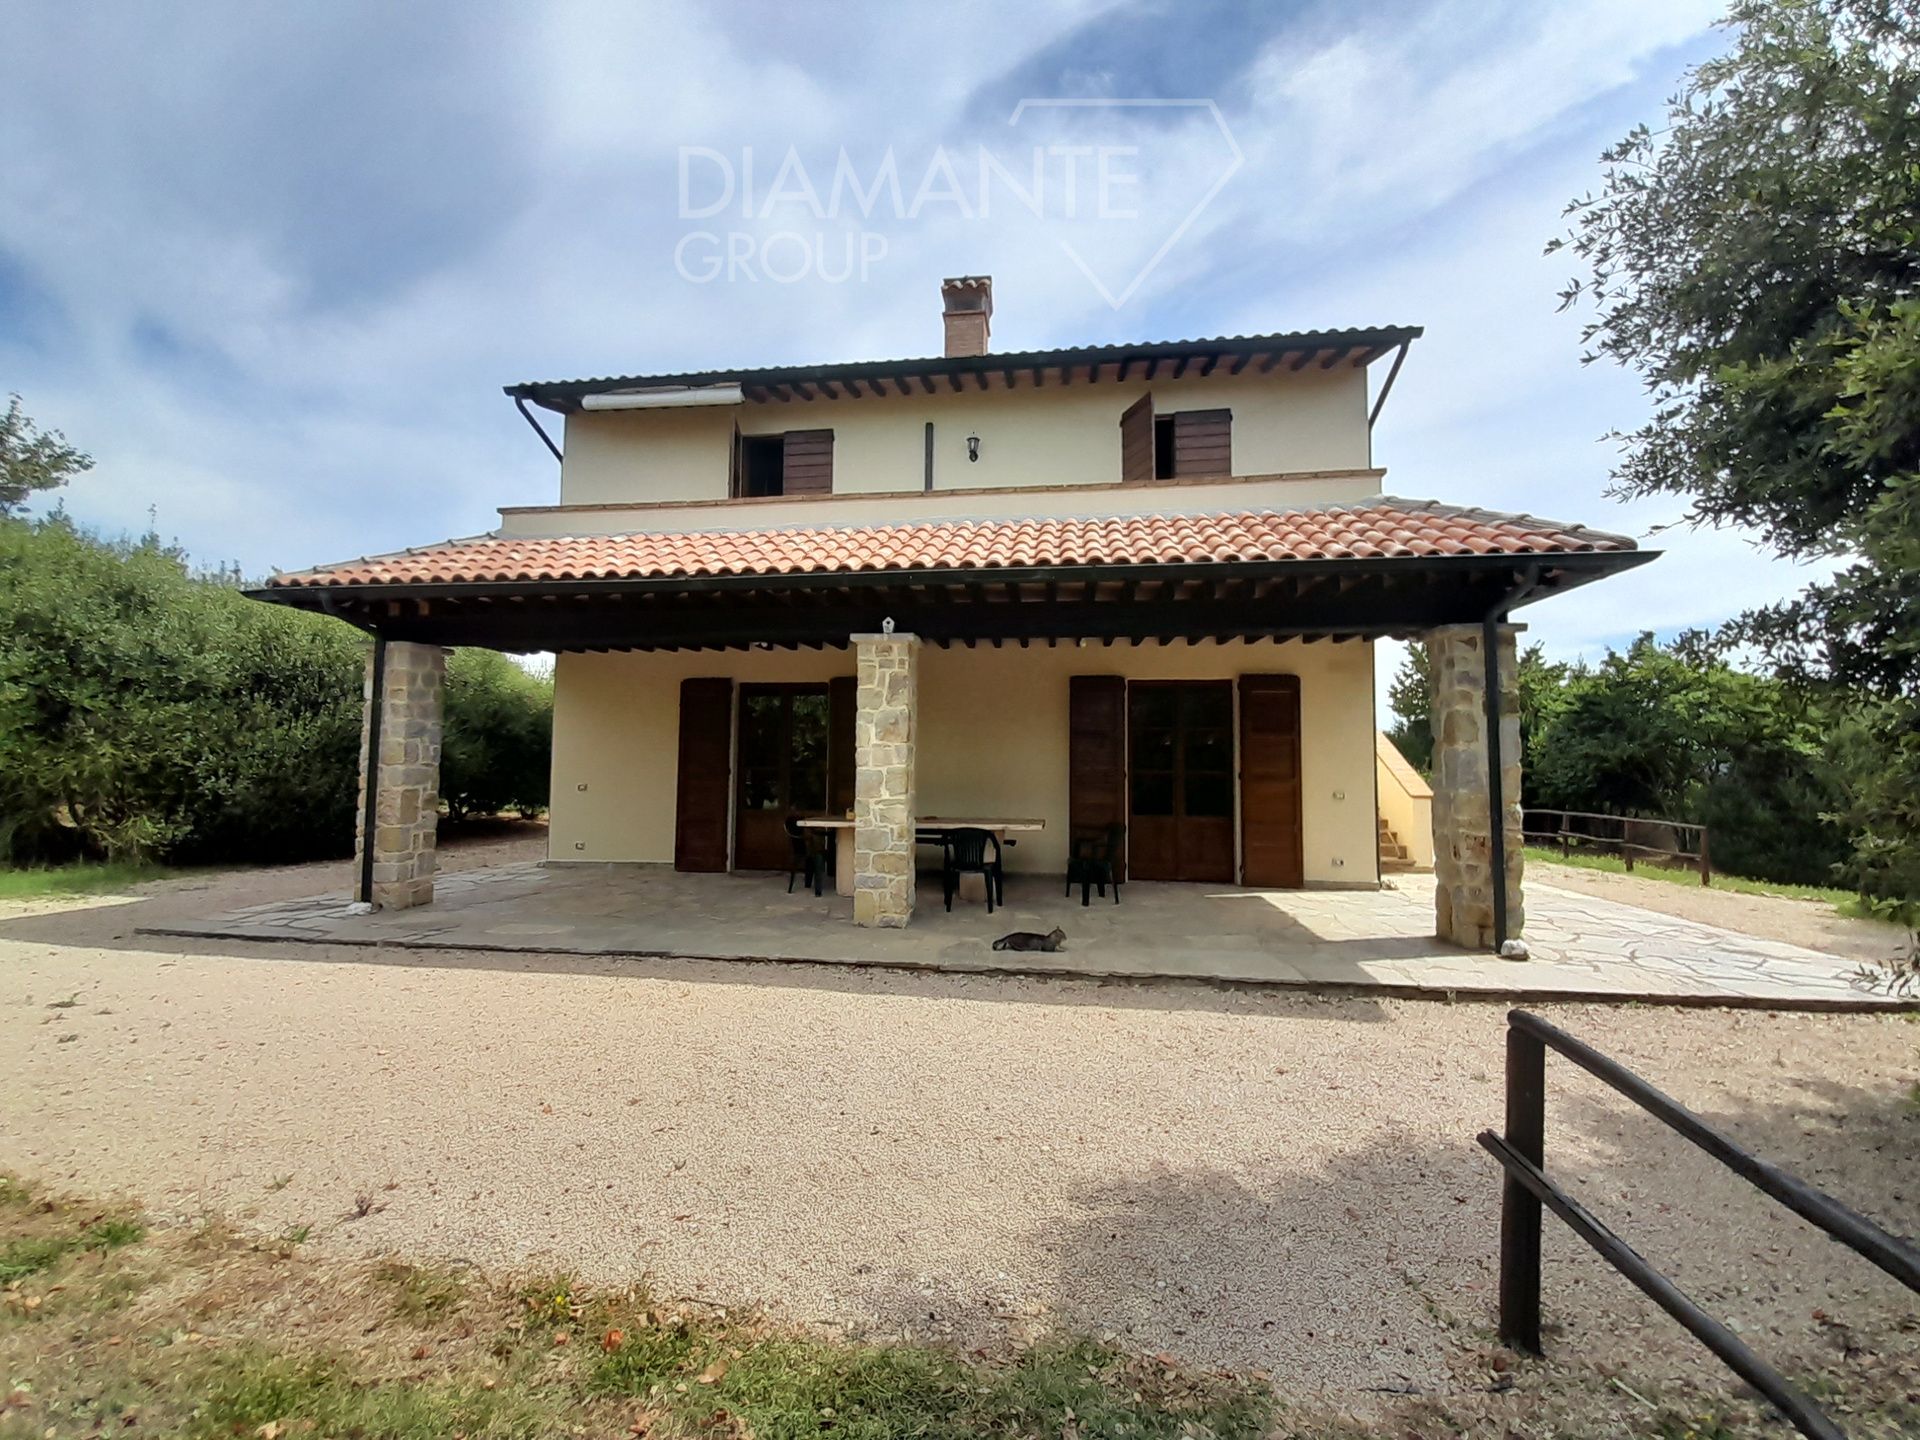 For sale cottage in quiet zone Massa Marittima Toscana